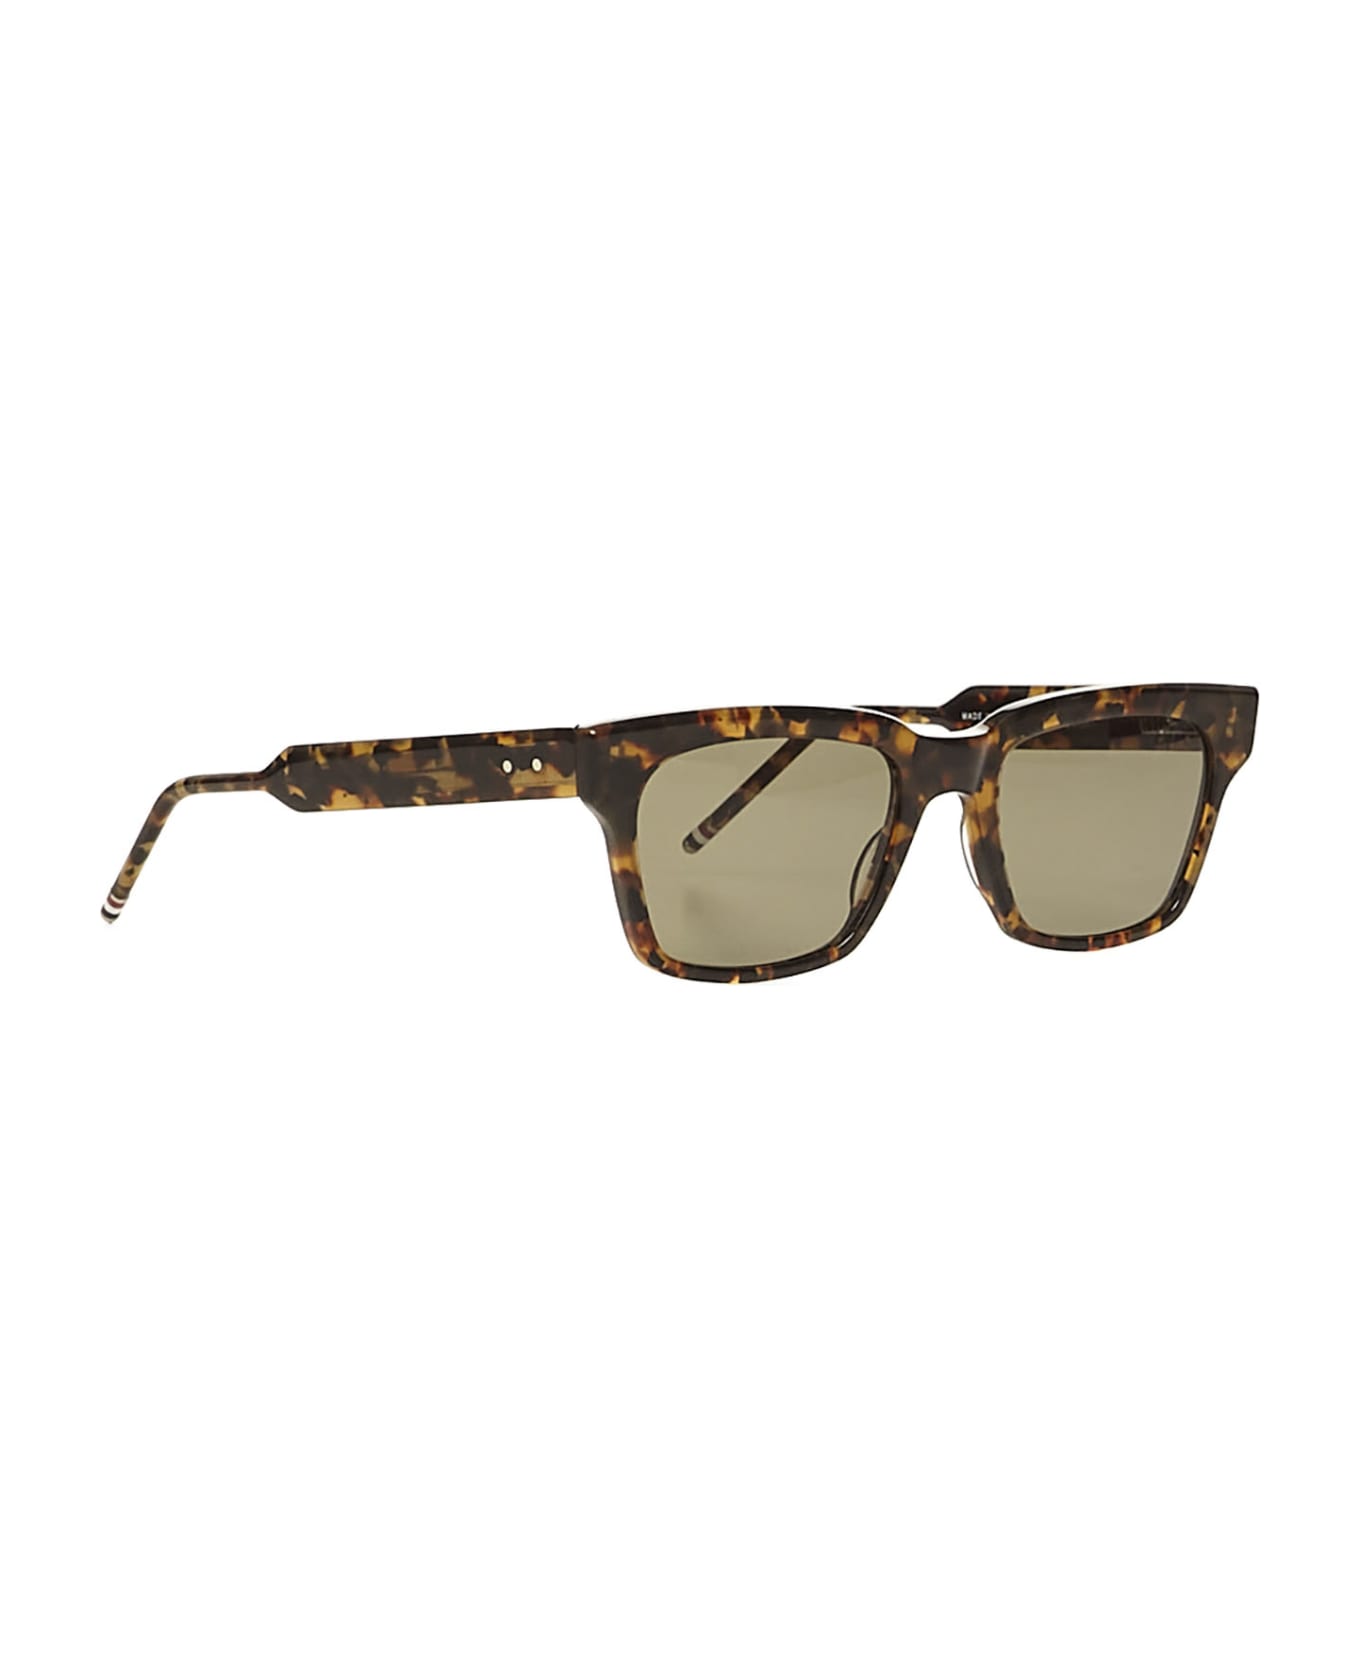 Thom Browne Sunglasses Tb418 Sunglasses - Brown サングラス